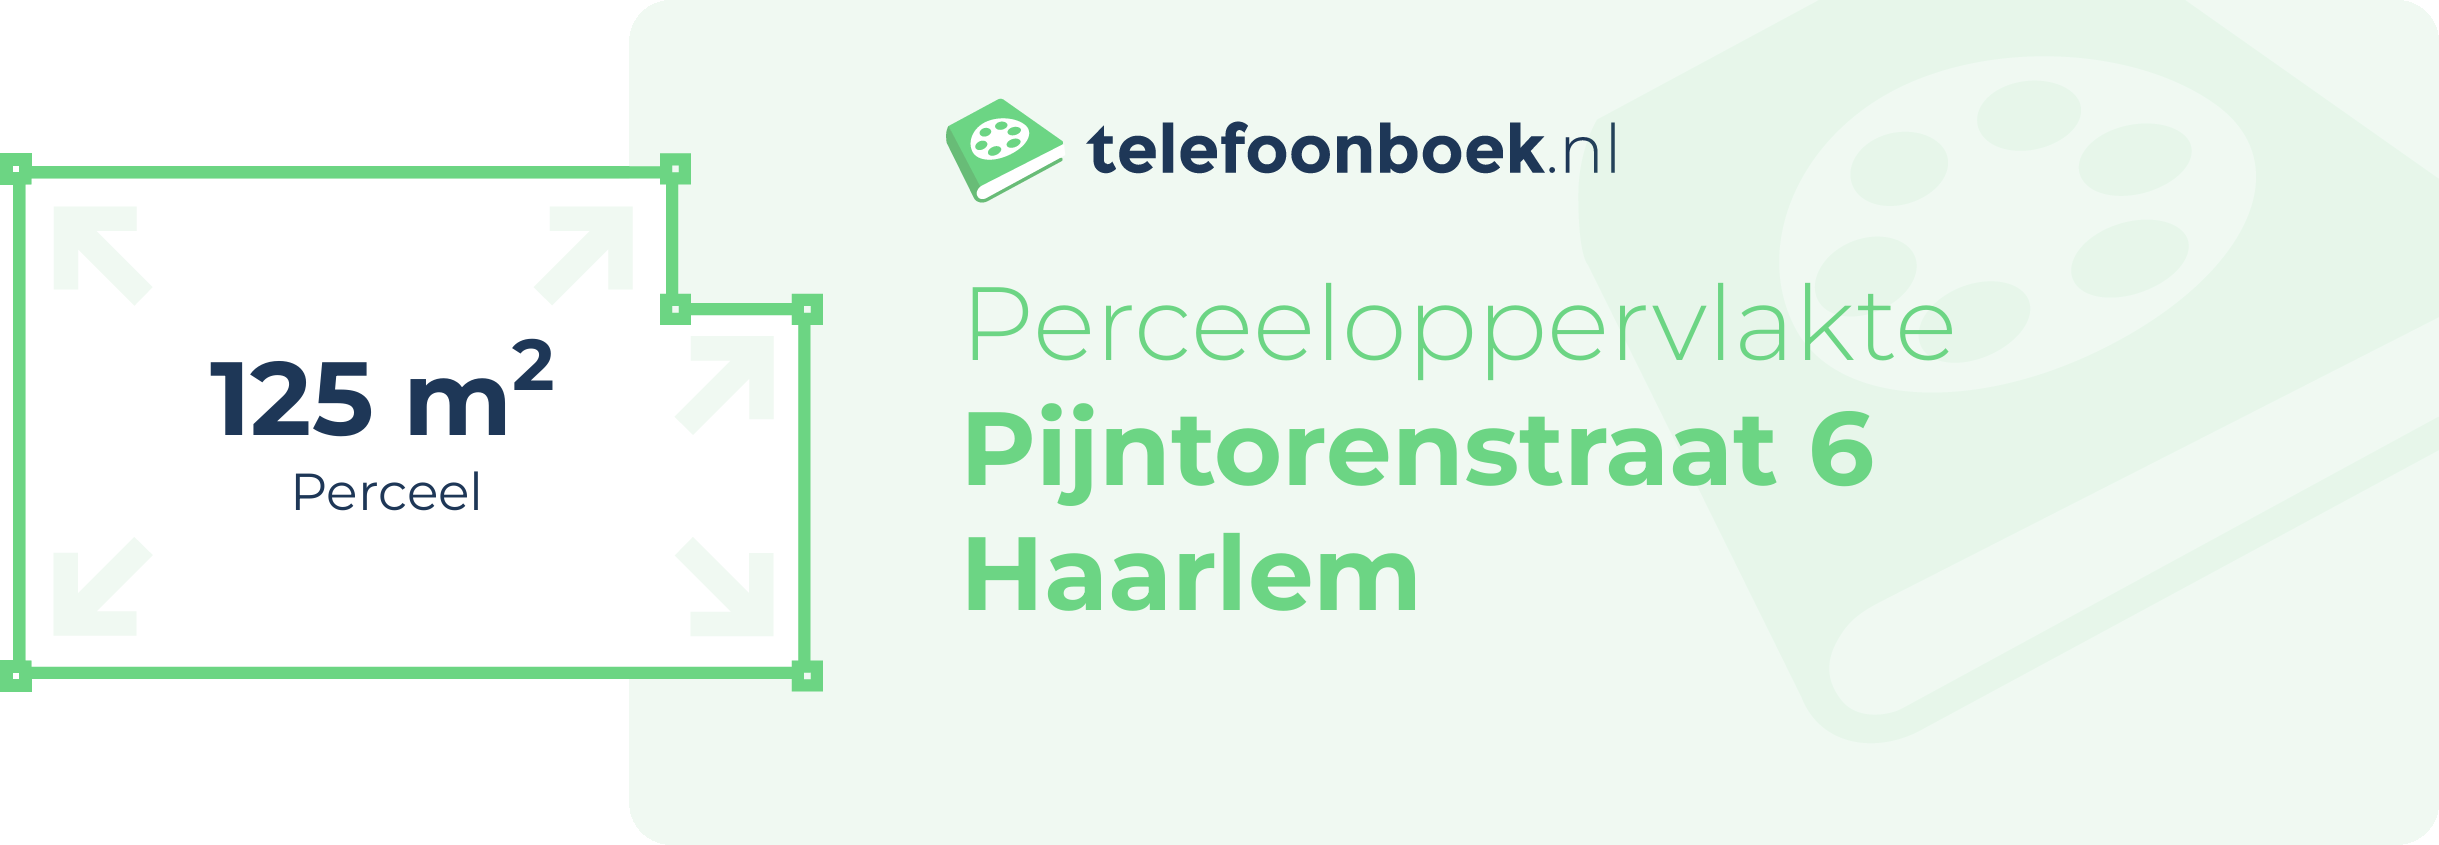 Perceeloppervlakte Pijntorenstraat 6 Haarlem